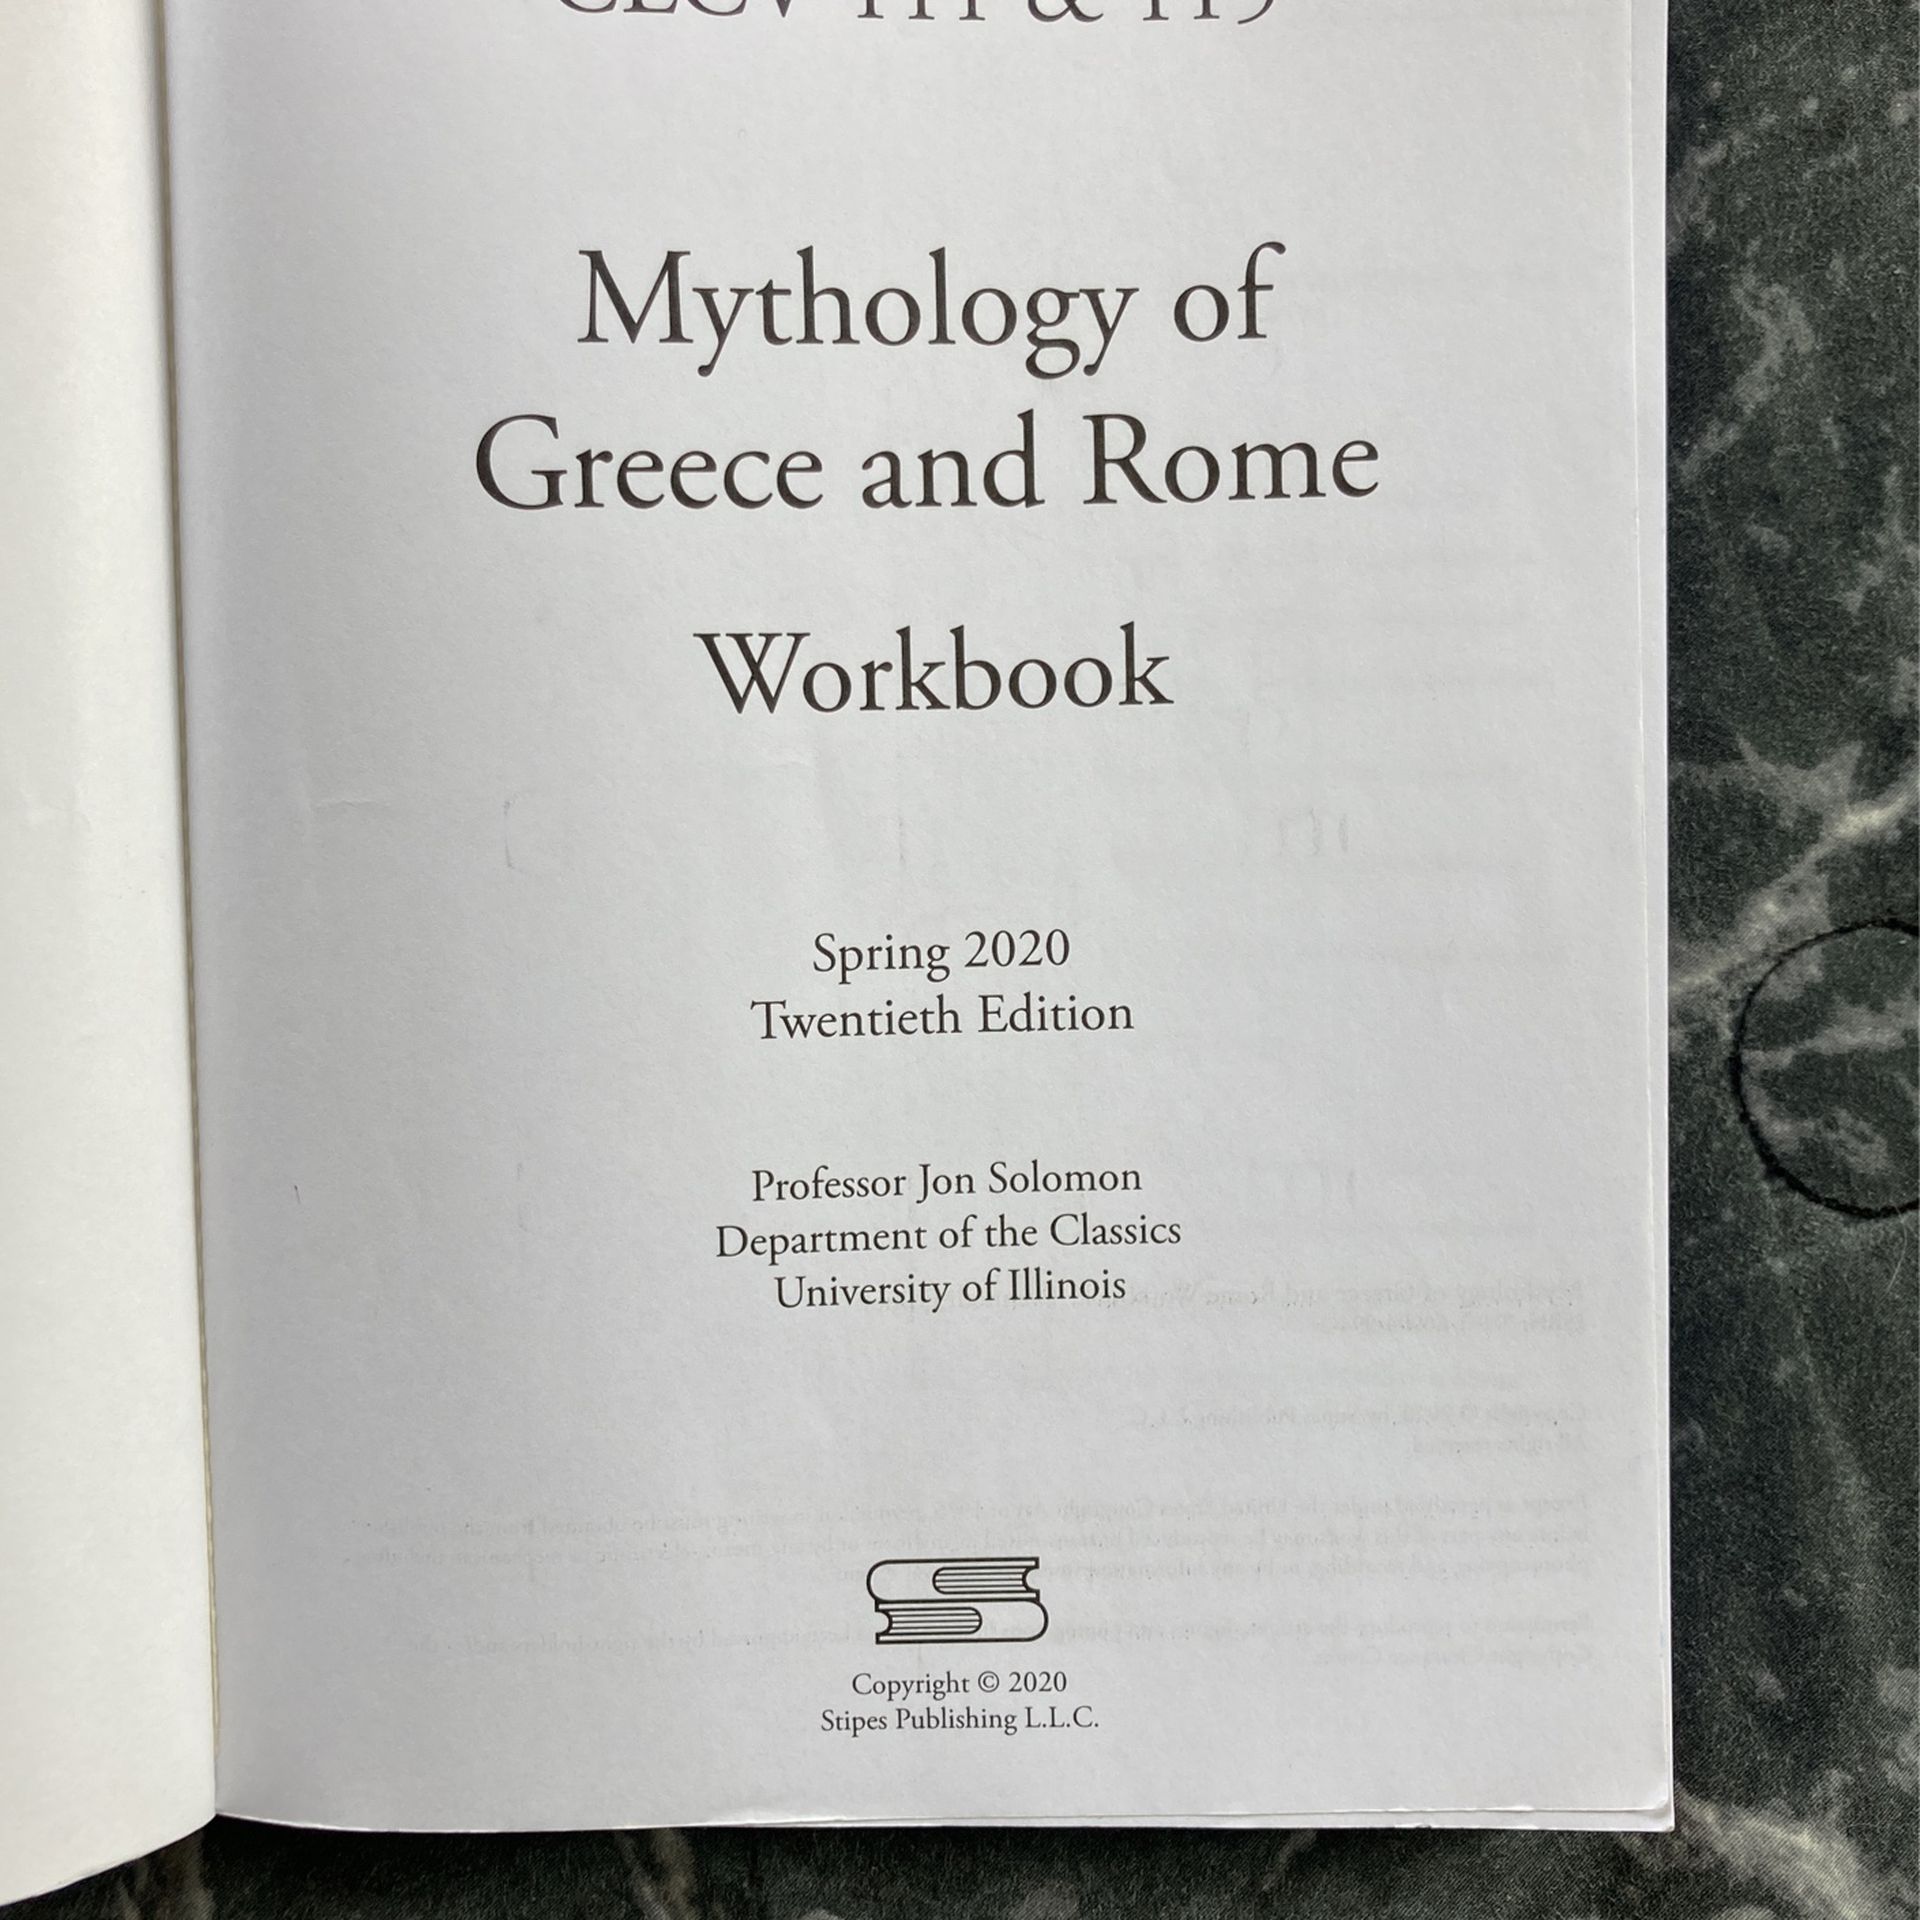 Mythology of Greek and Rome Workbook